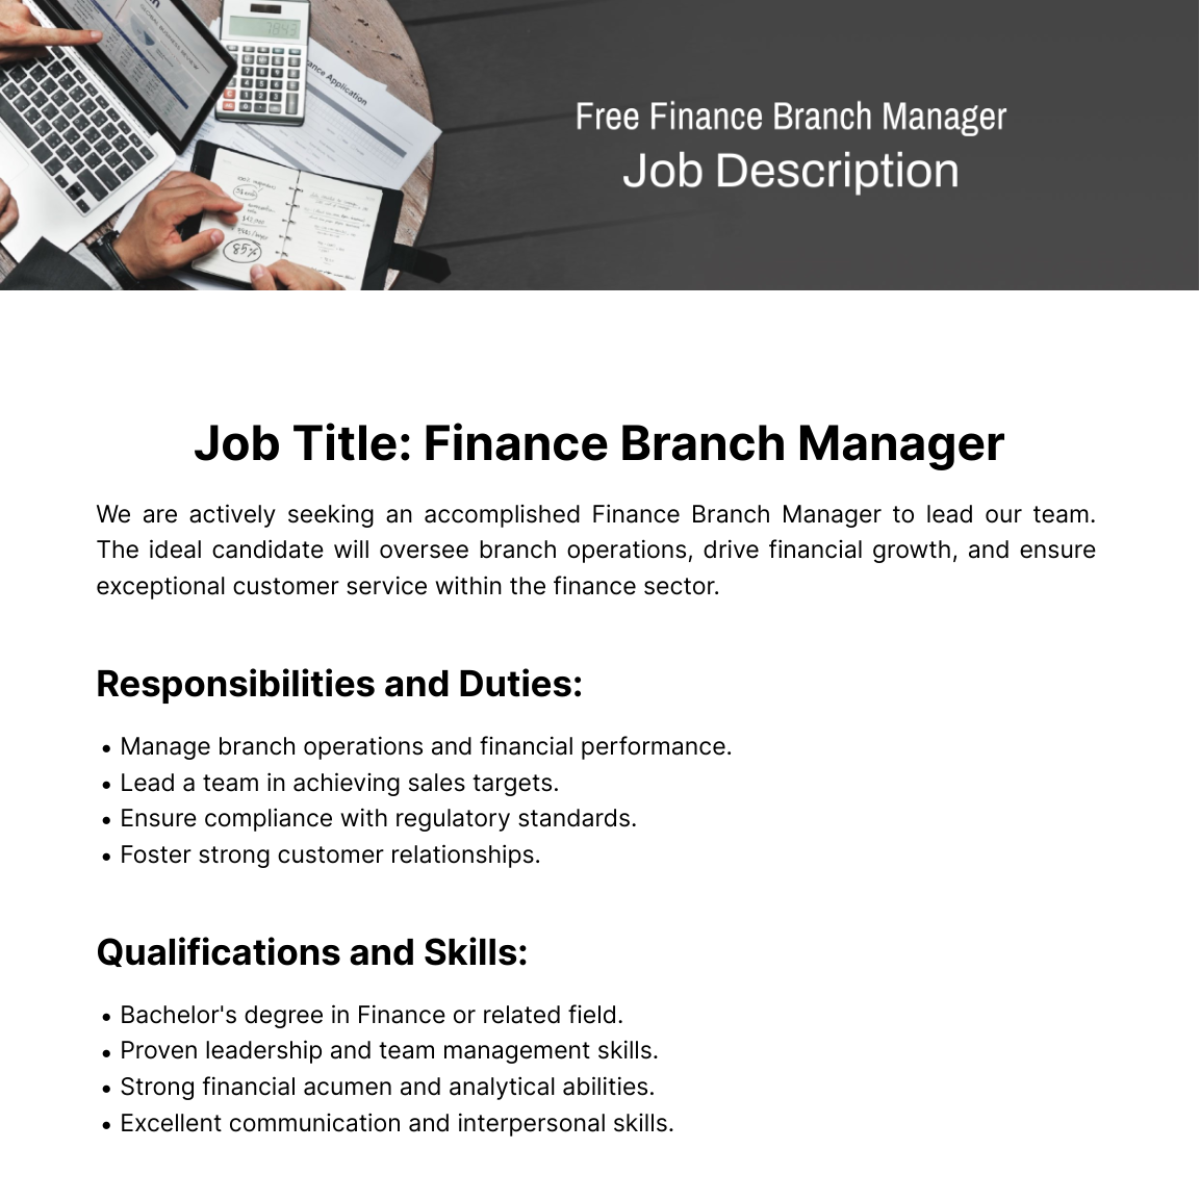 Free Finance Branch Manager Job Description Template